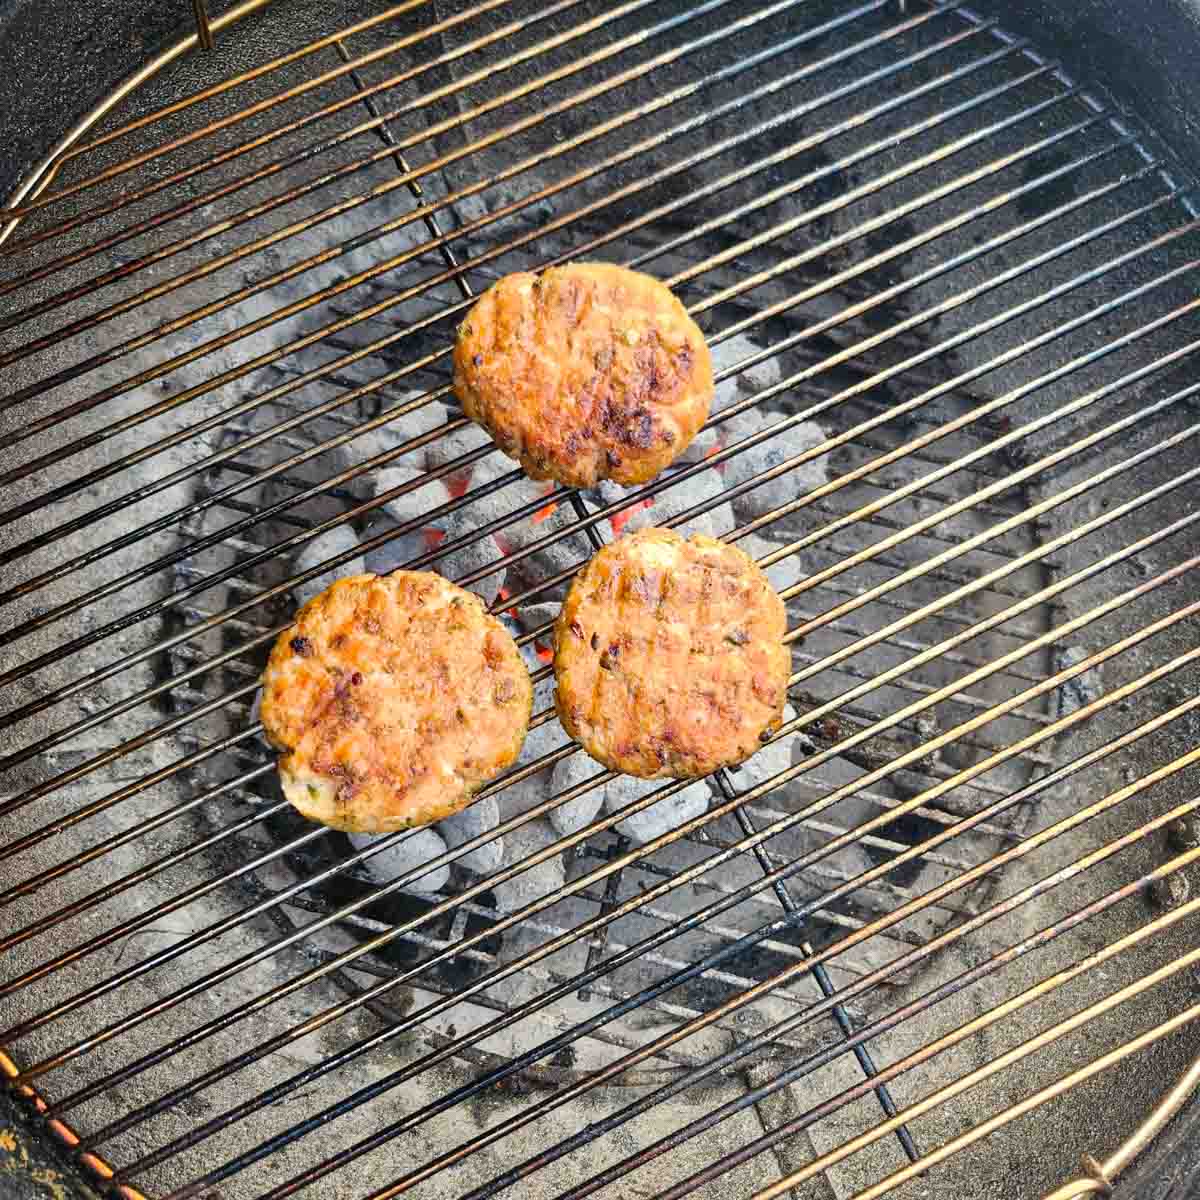 three salmon burgers on the grill